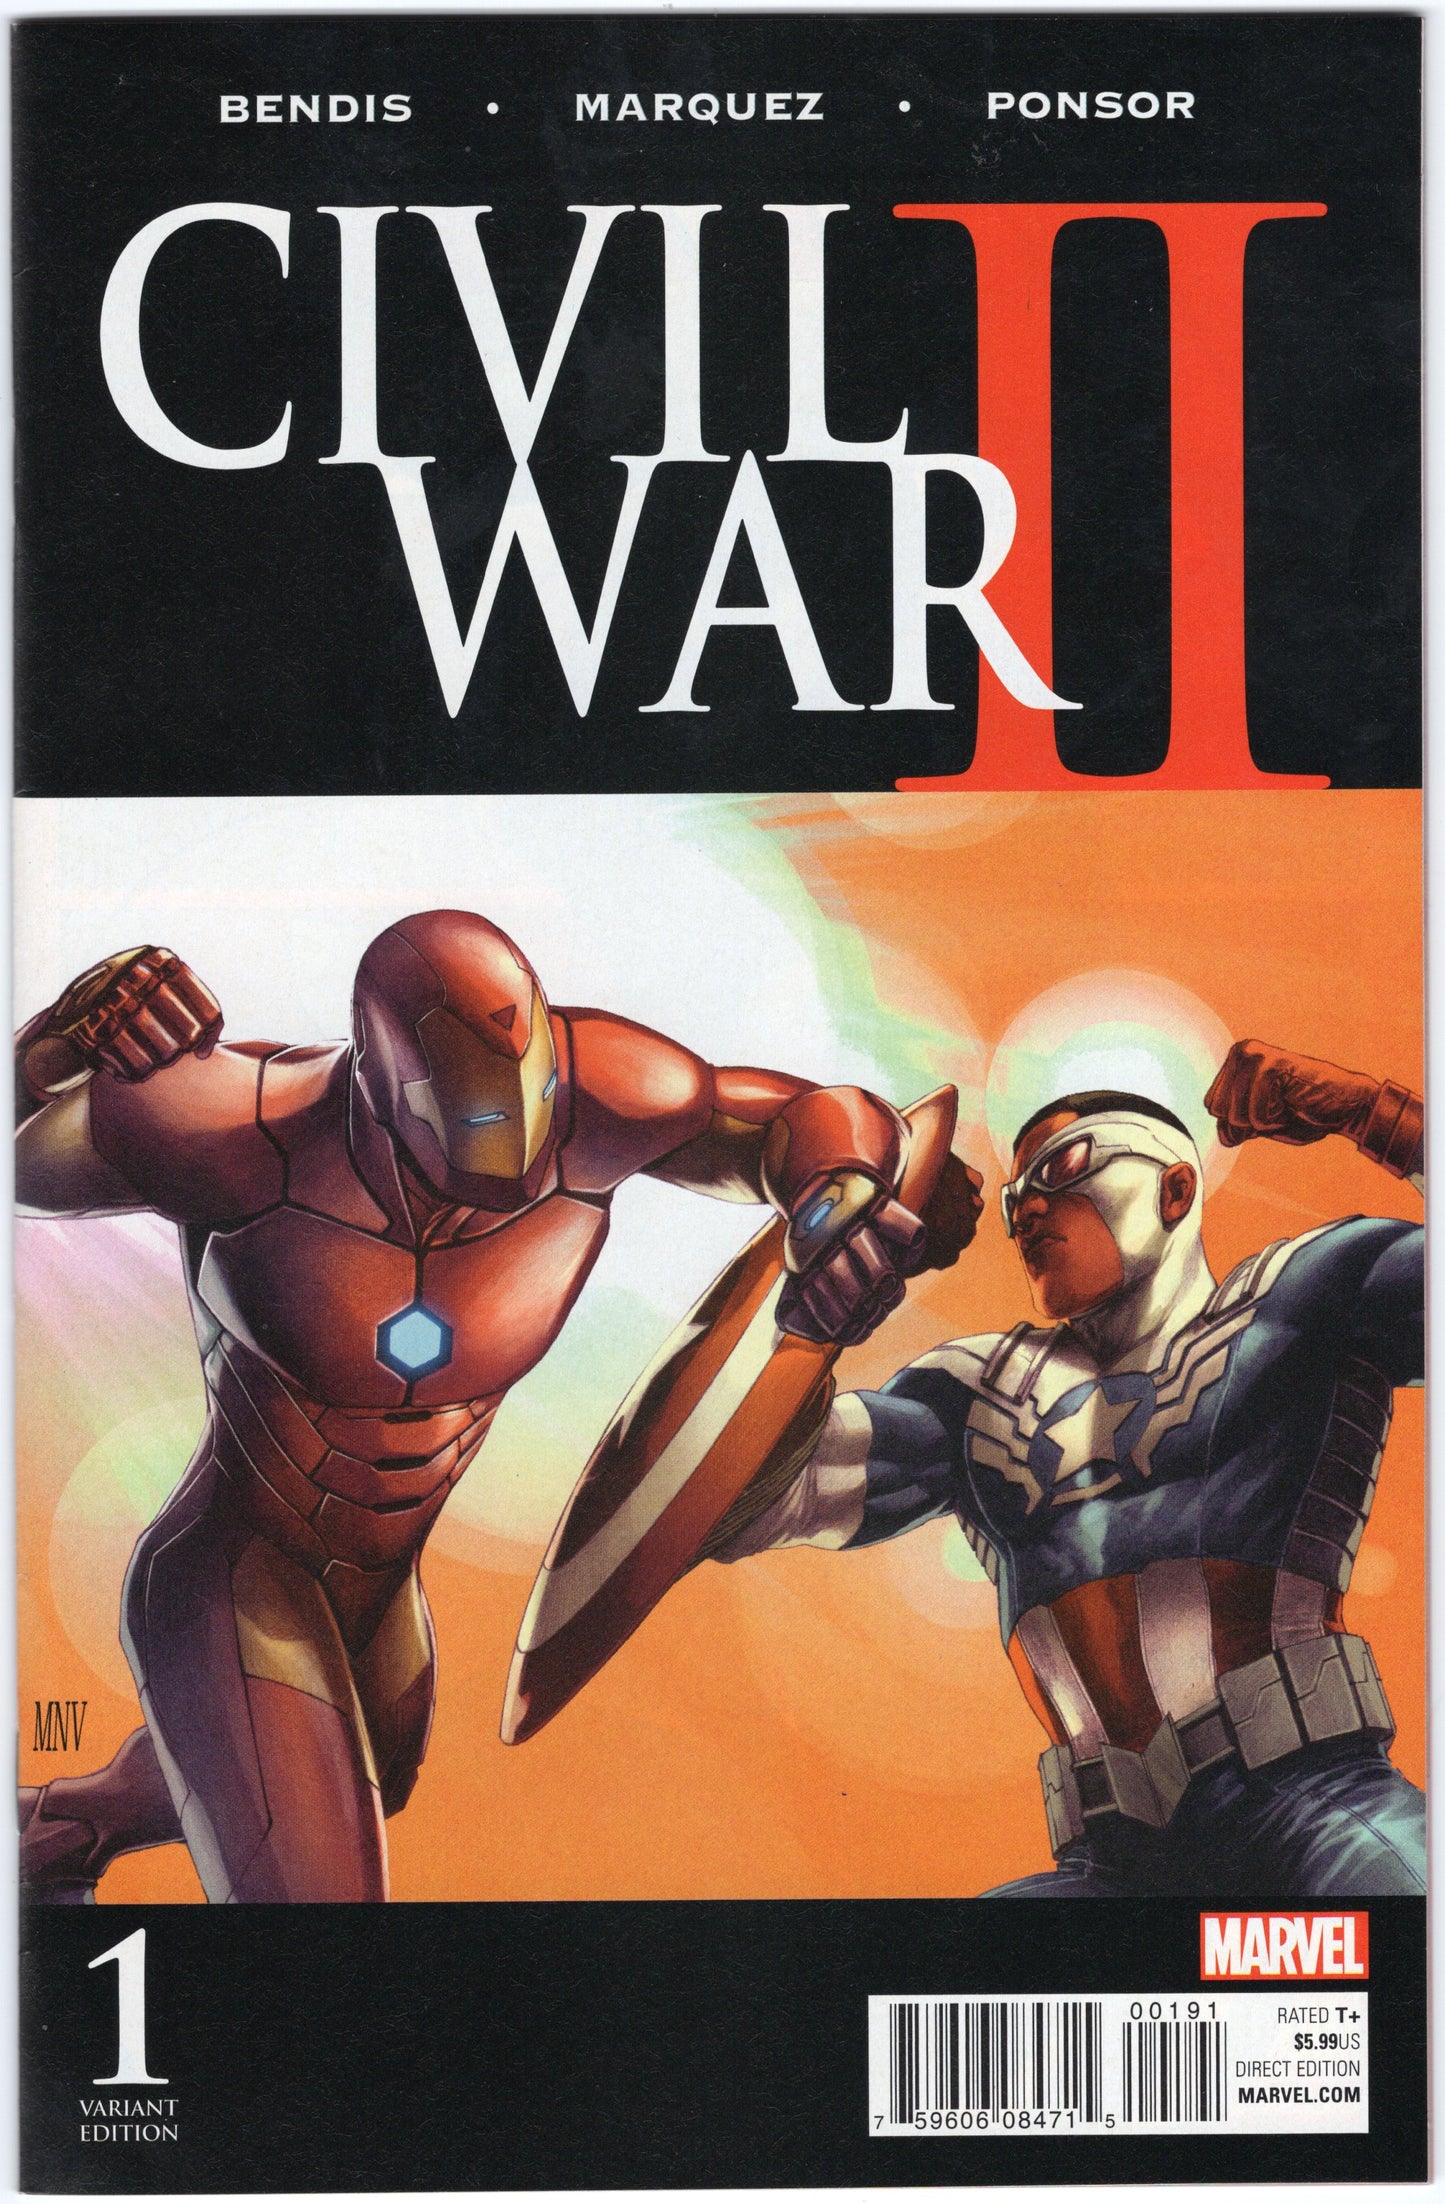 Civil War II - Issue #1 "Variant Cover" (Aug. 2016 - Marvel Comics) VF-